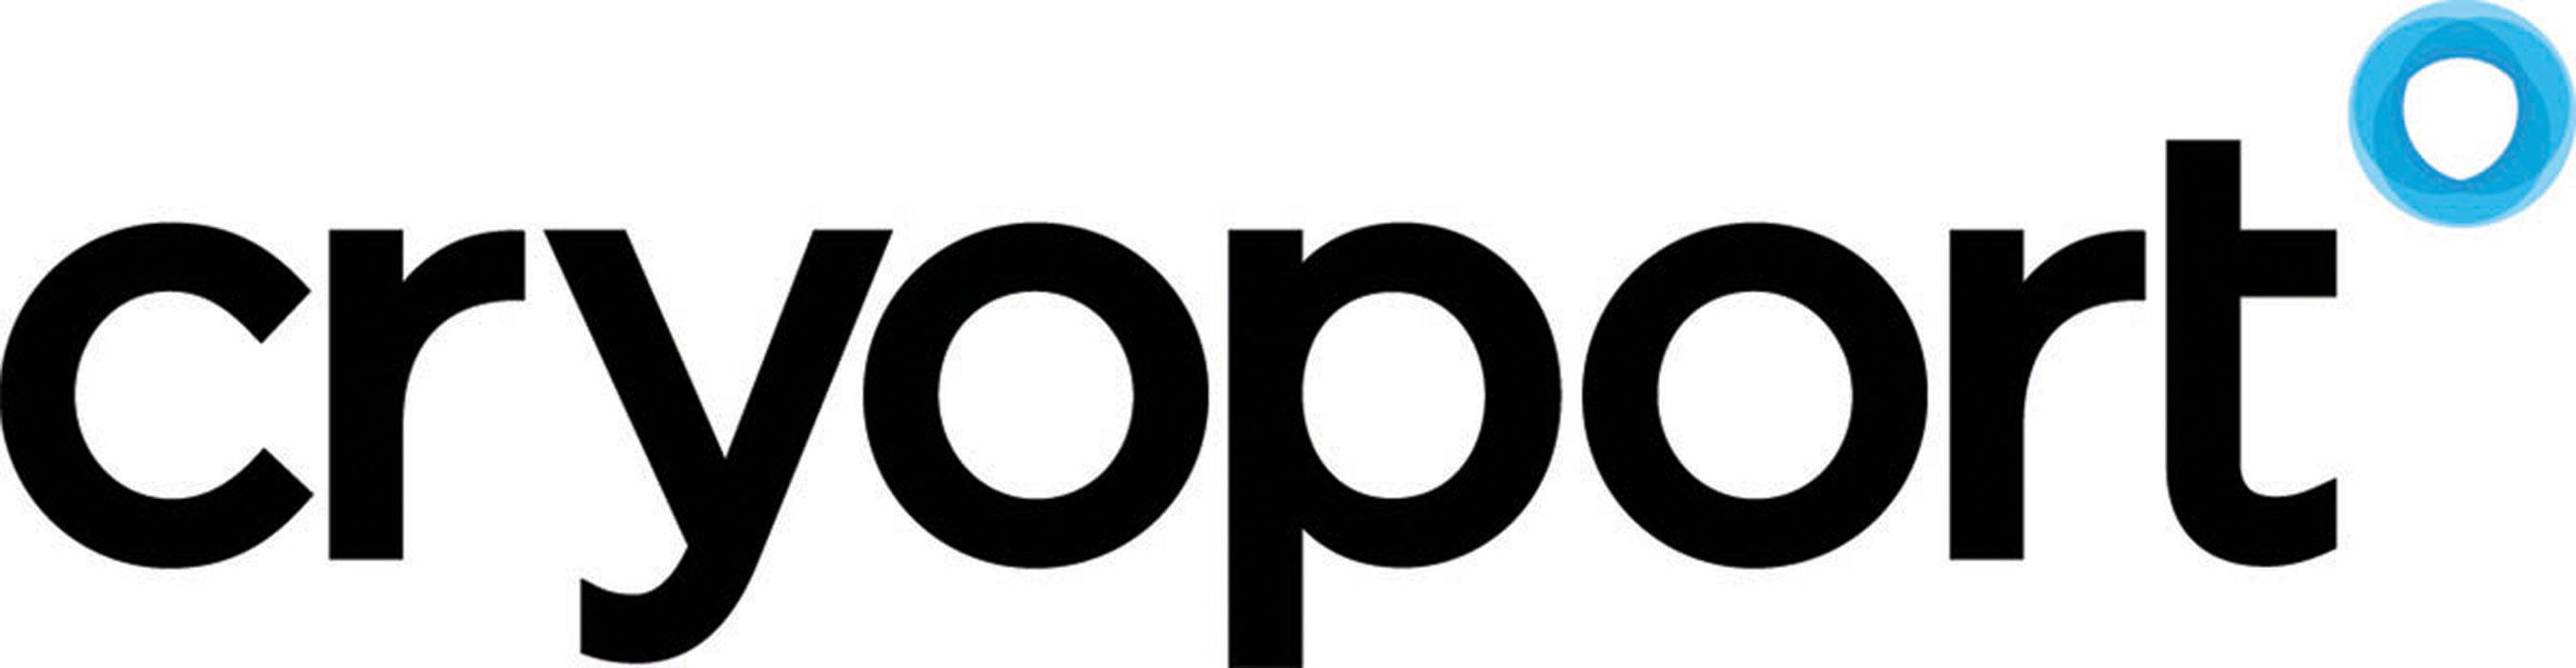 Cryoport, Inc. Logo.